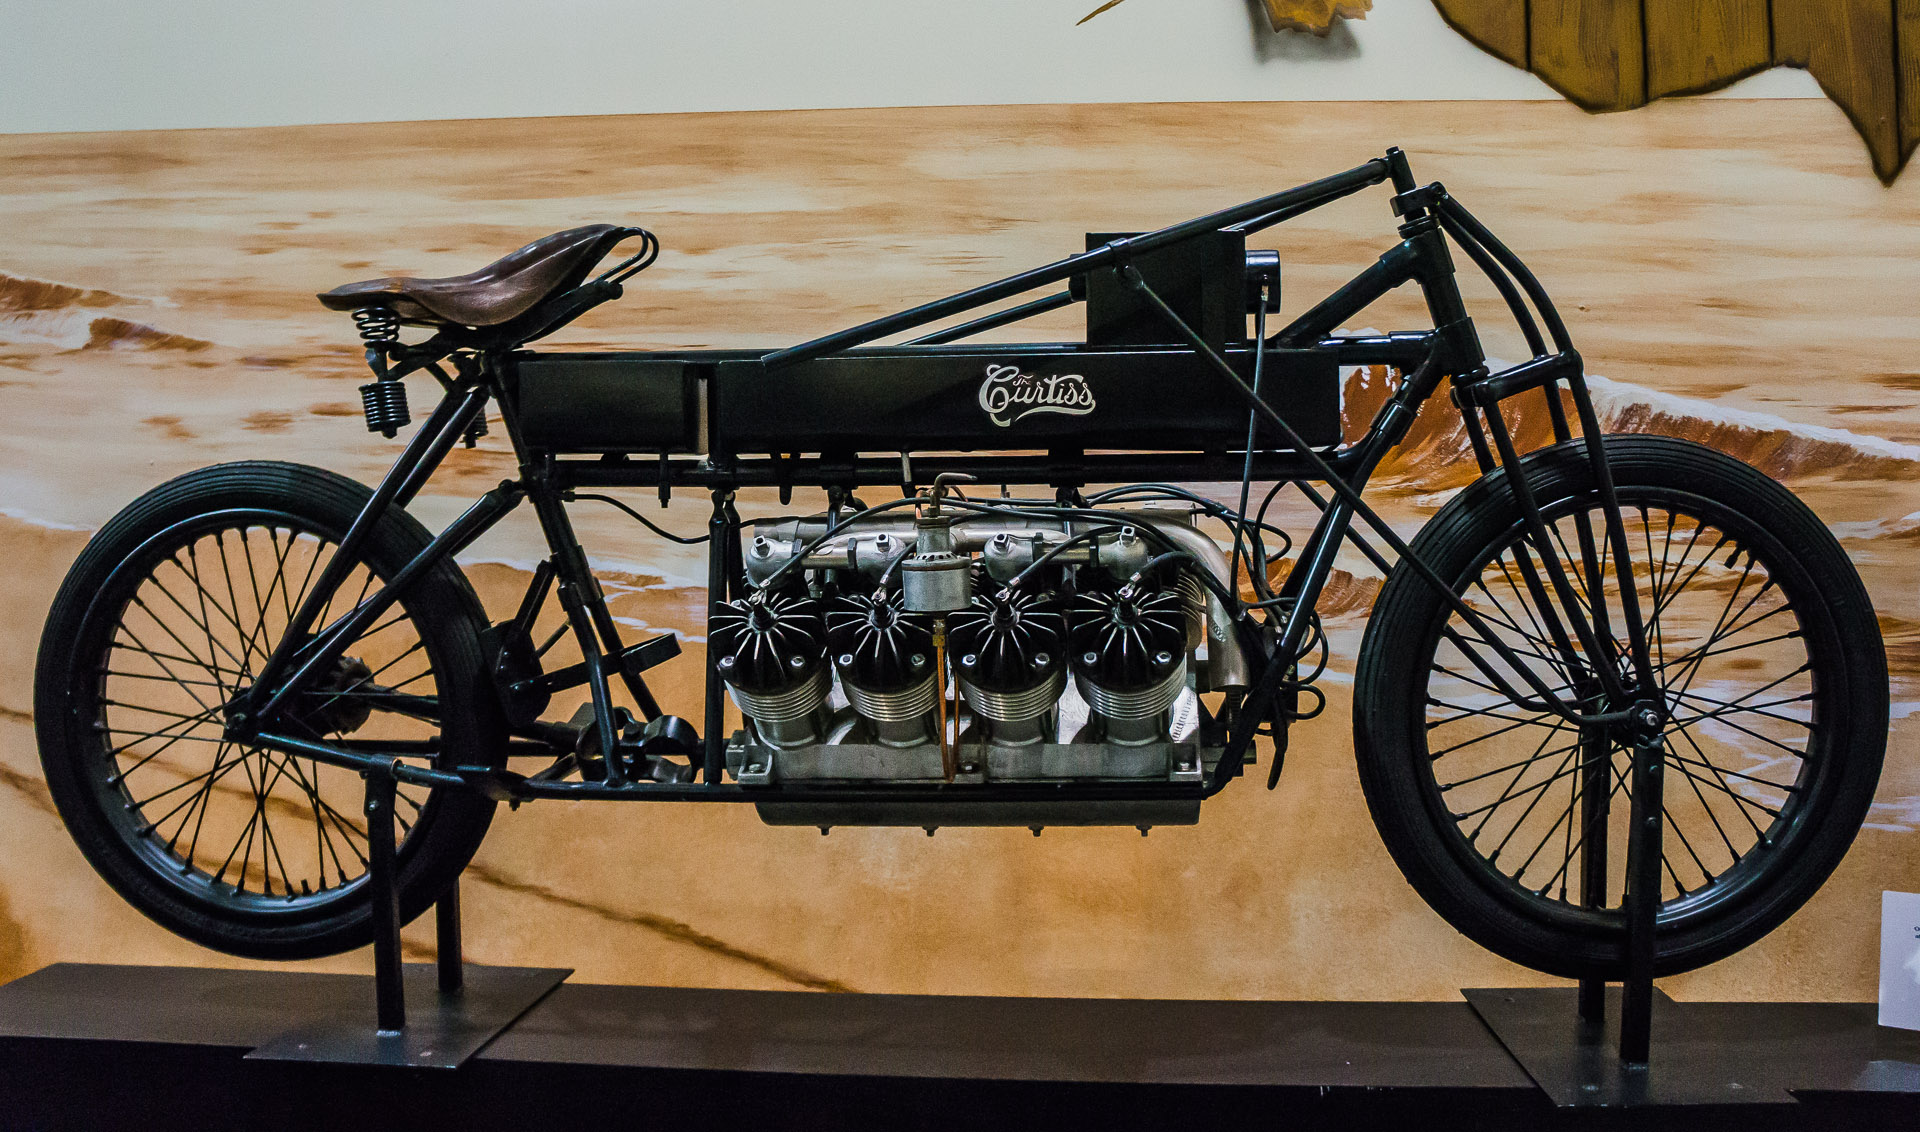 La moto de Glenn Curtiss